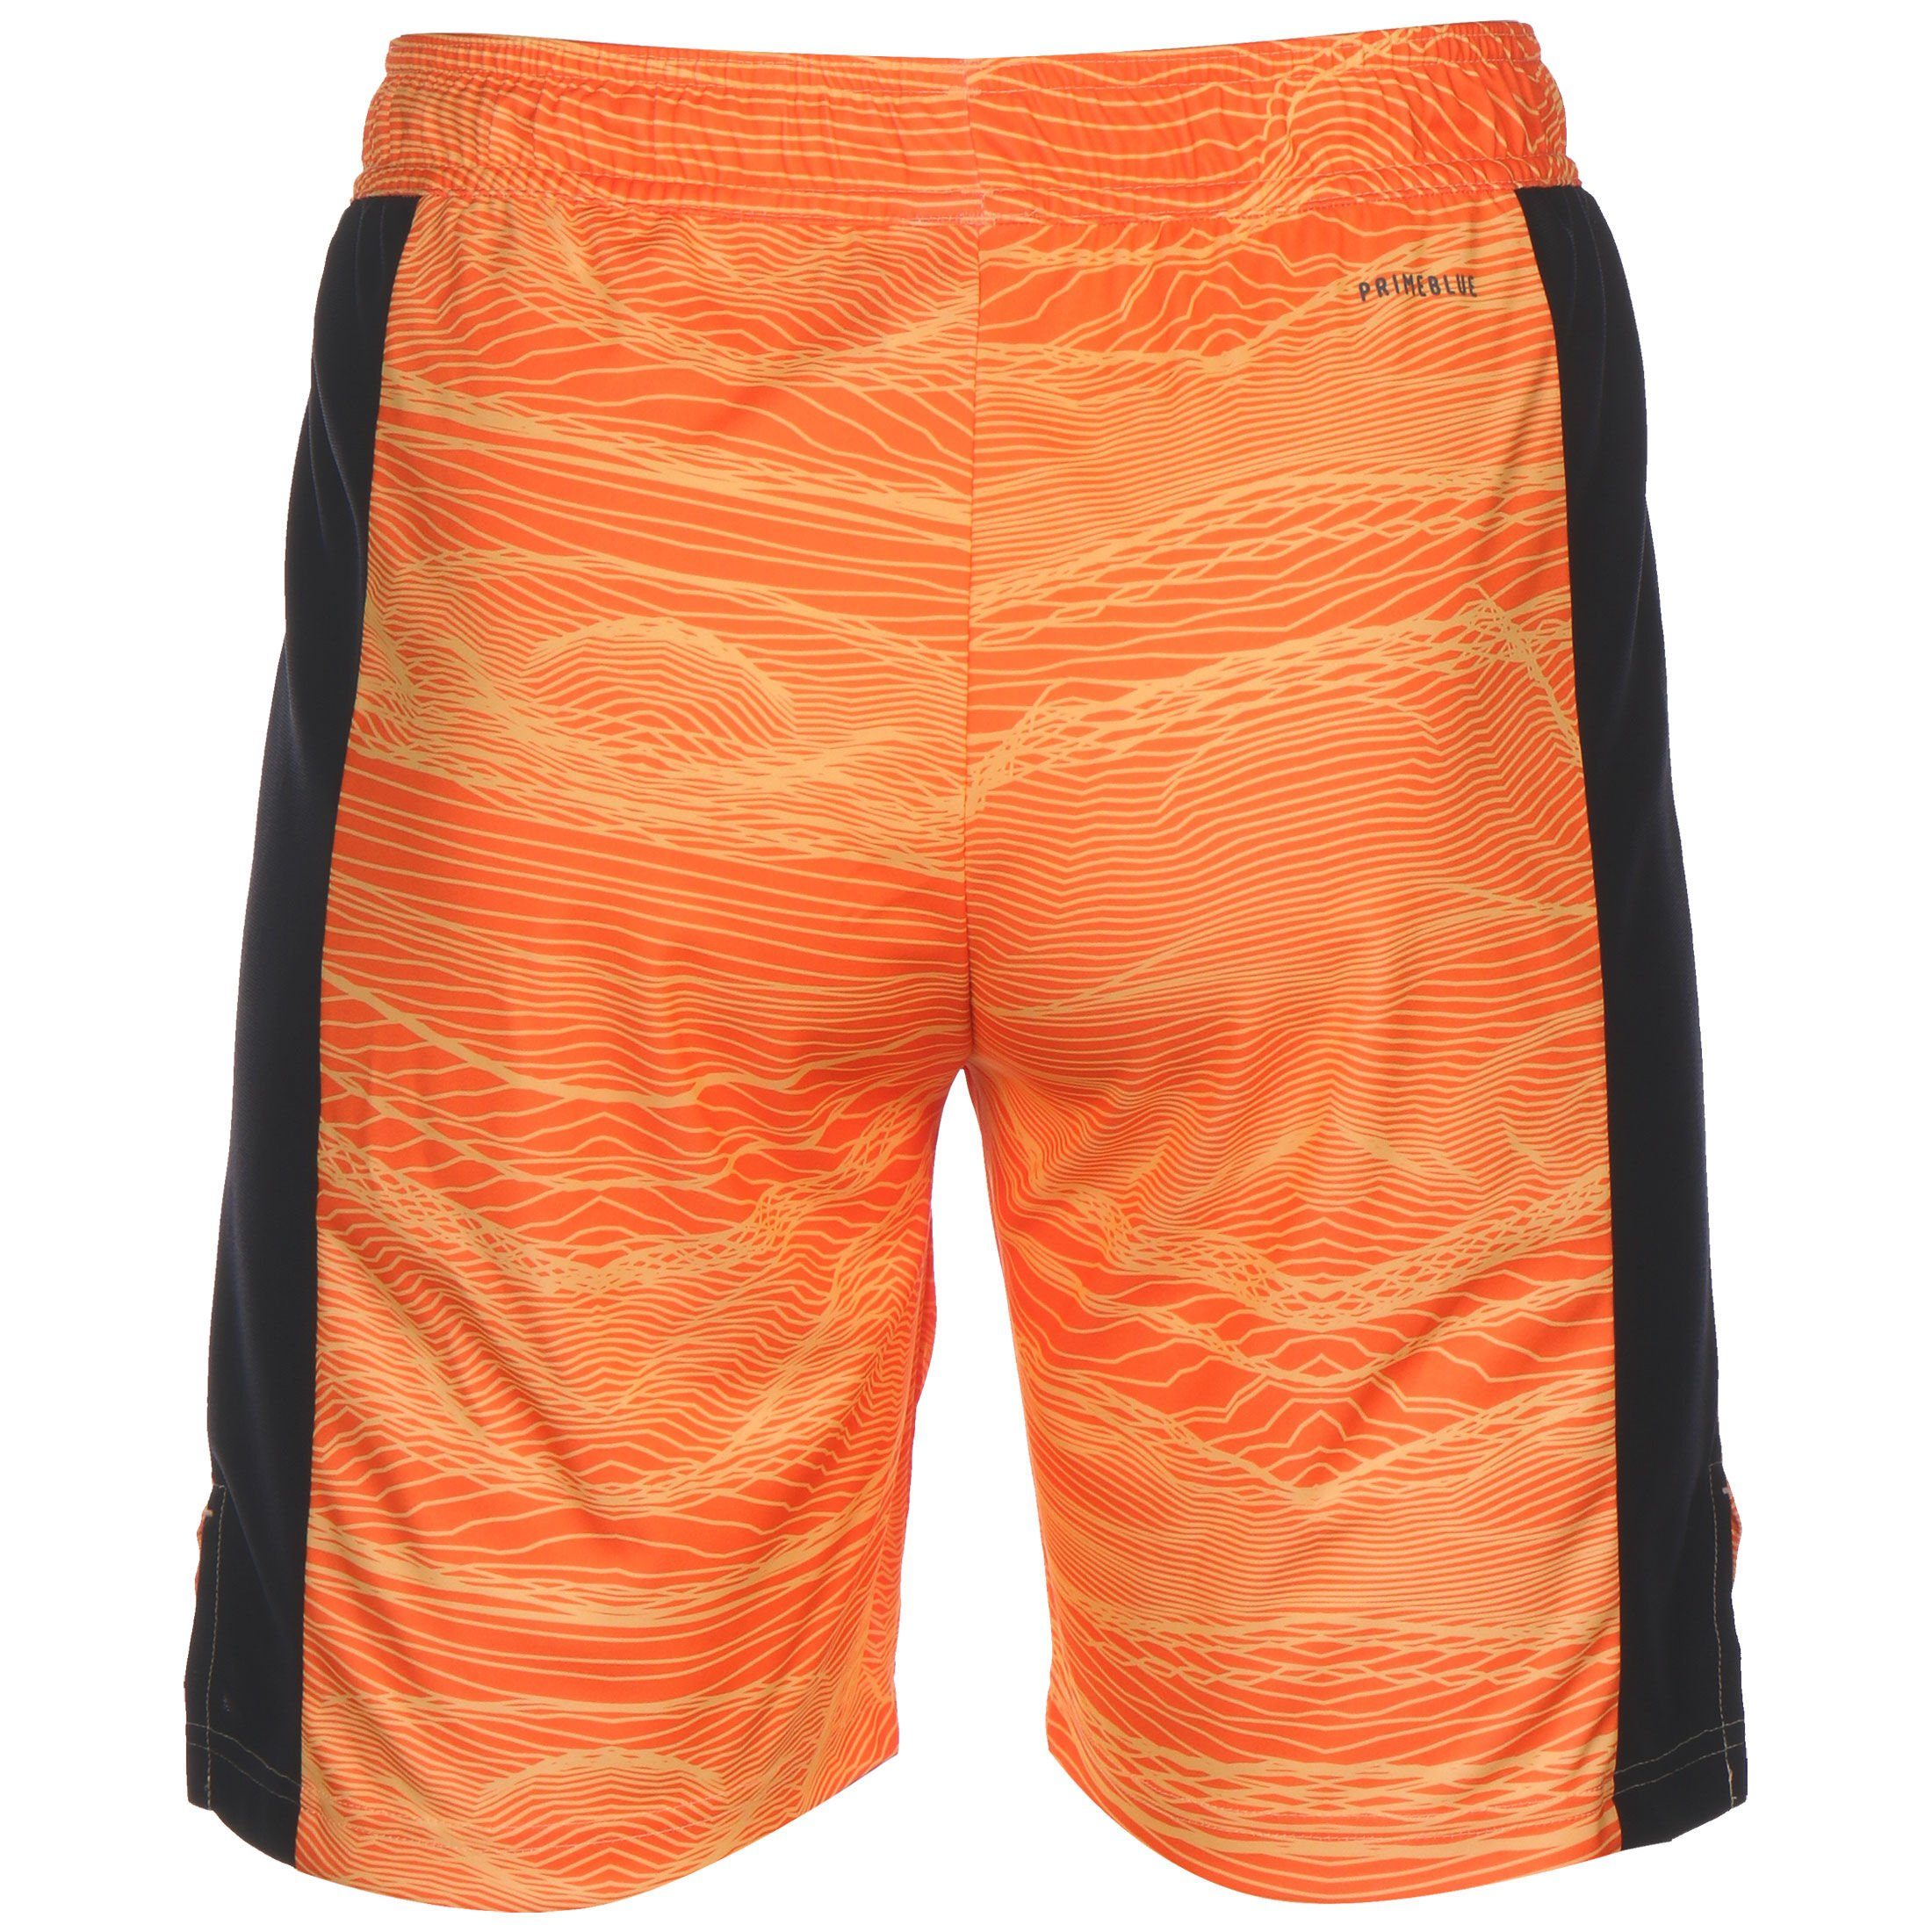 21 Shorts Performance Herren Goalkeeper Condivo adidas orange Torwarthose